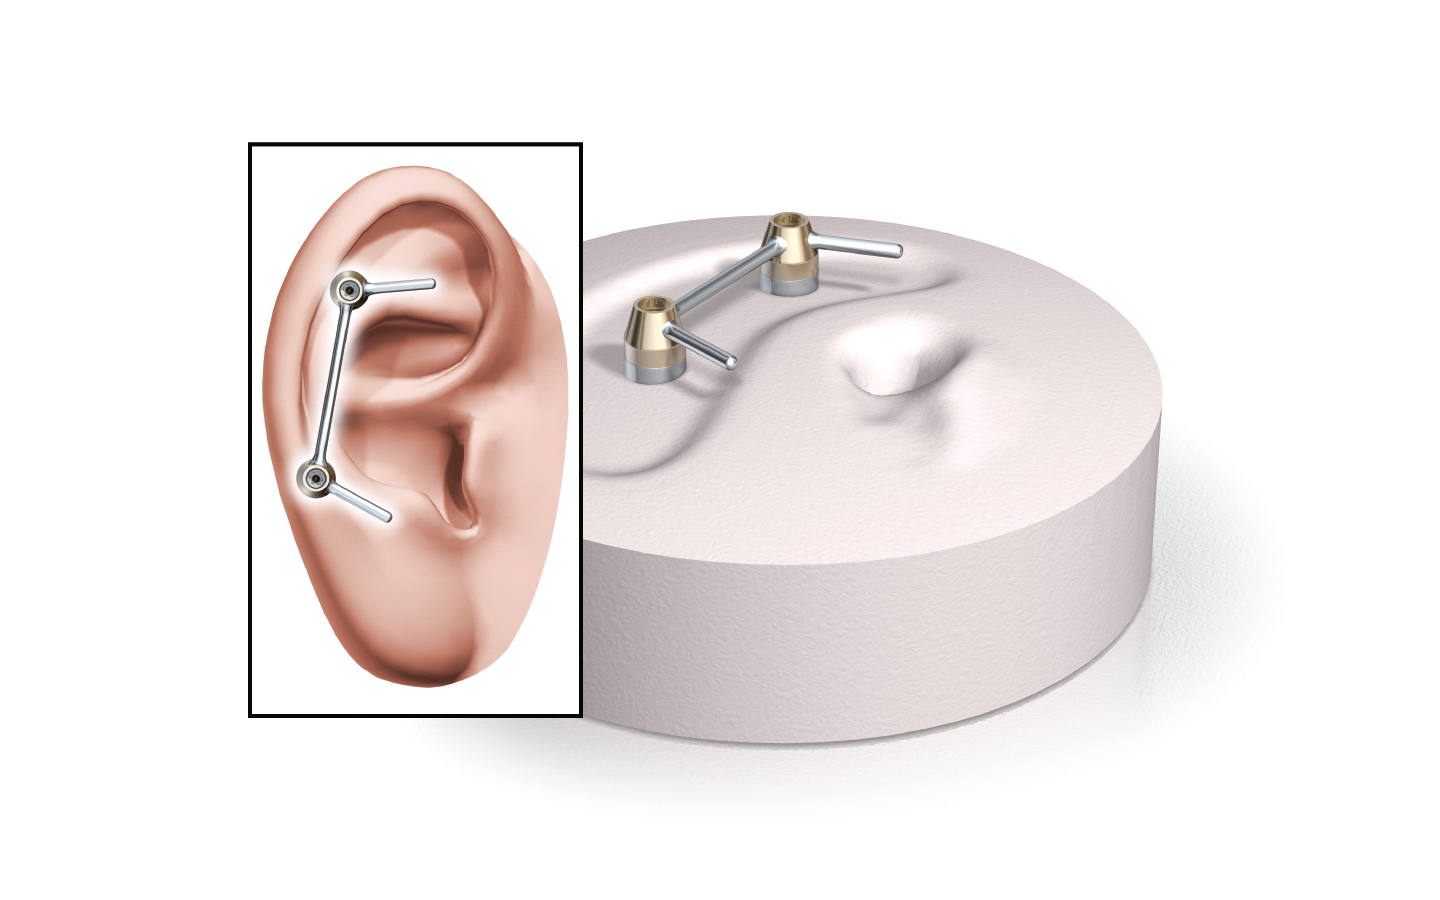 Illustration of Vistafix system implants and prosthetic ear